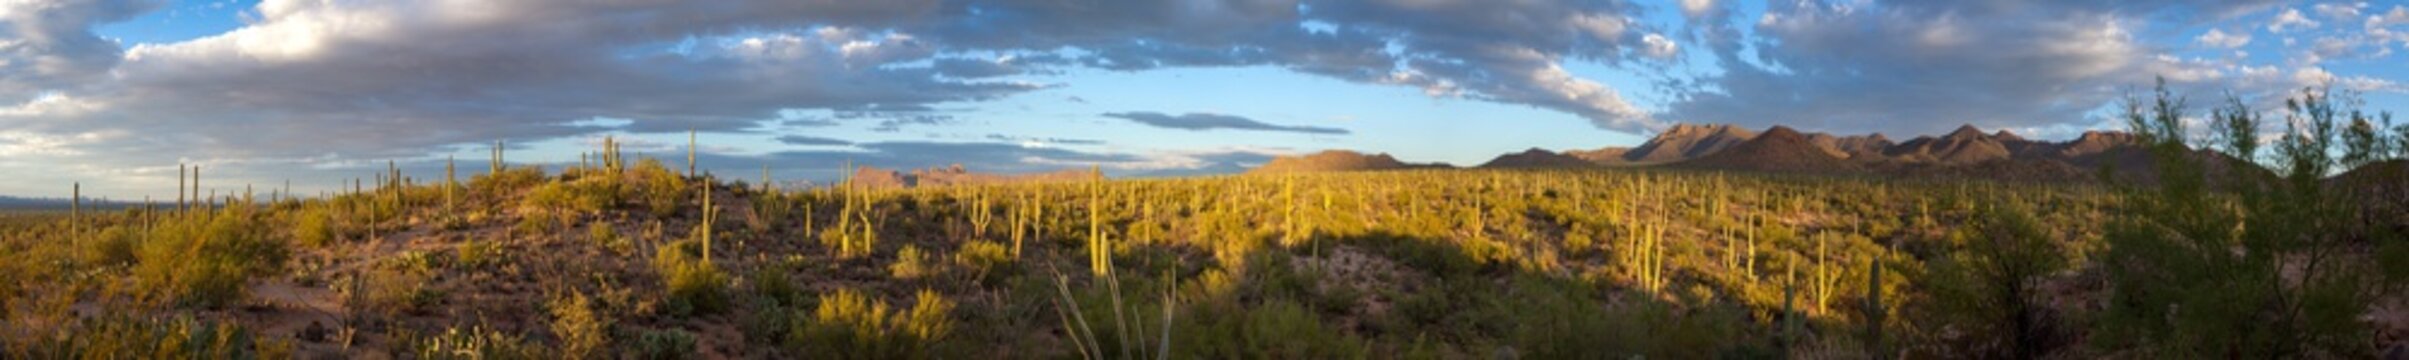 Saguaro National Park American Southwest Sonoran Desert Panorama